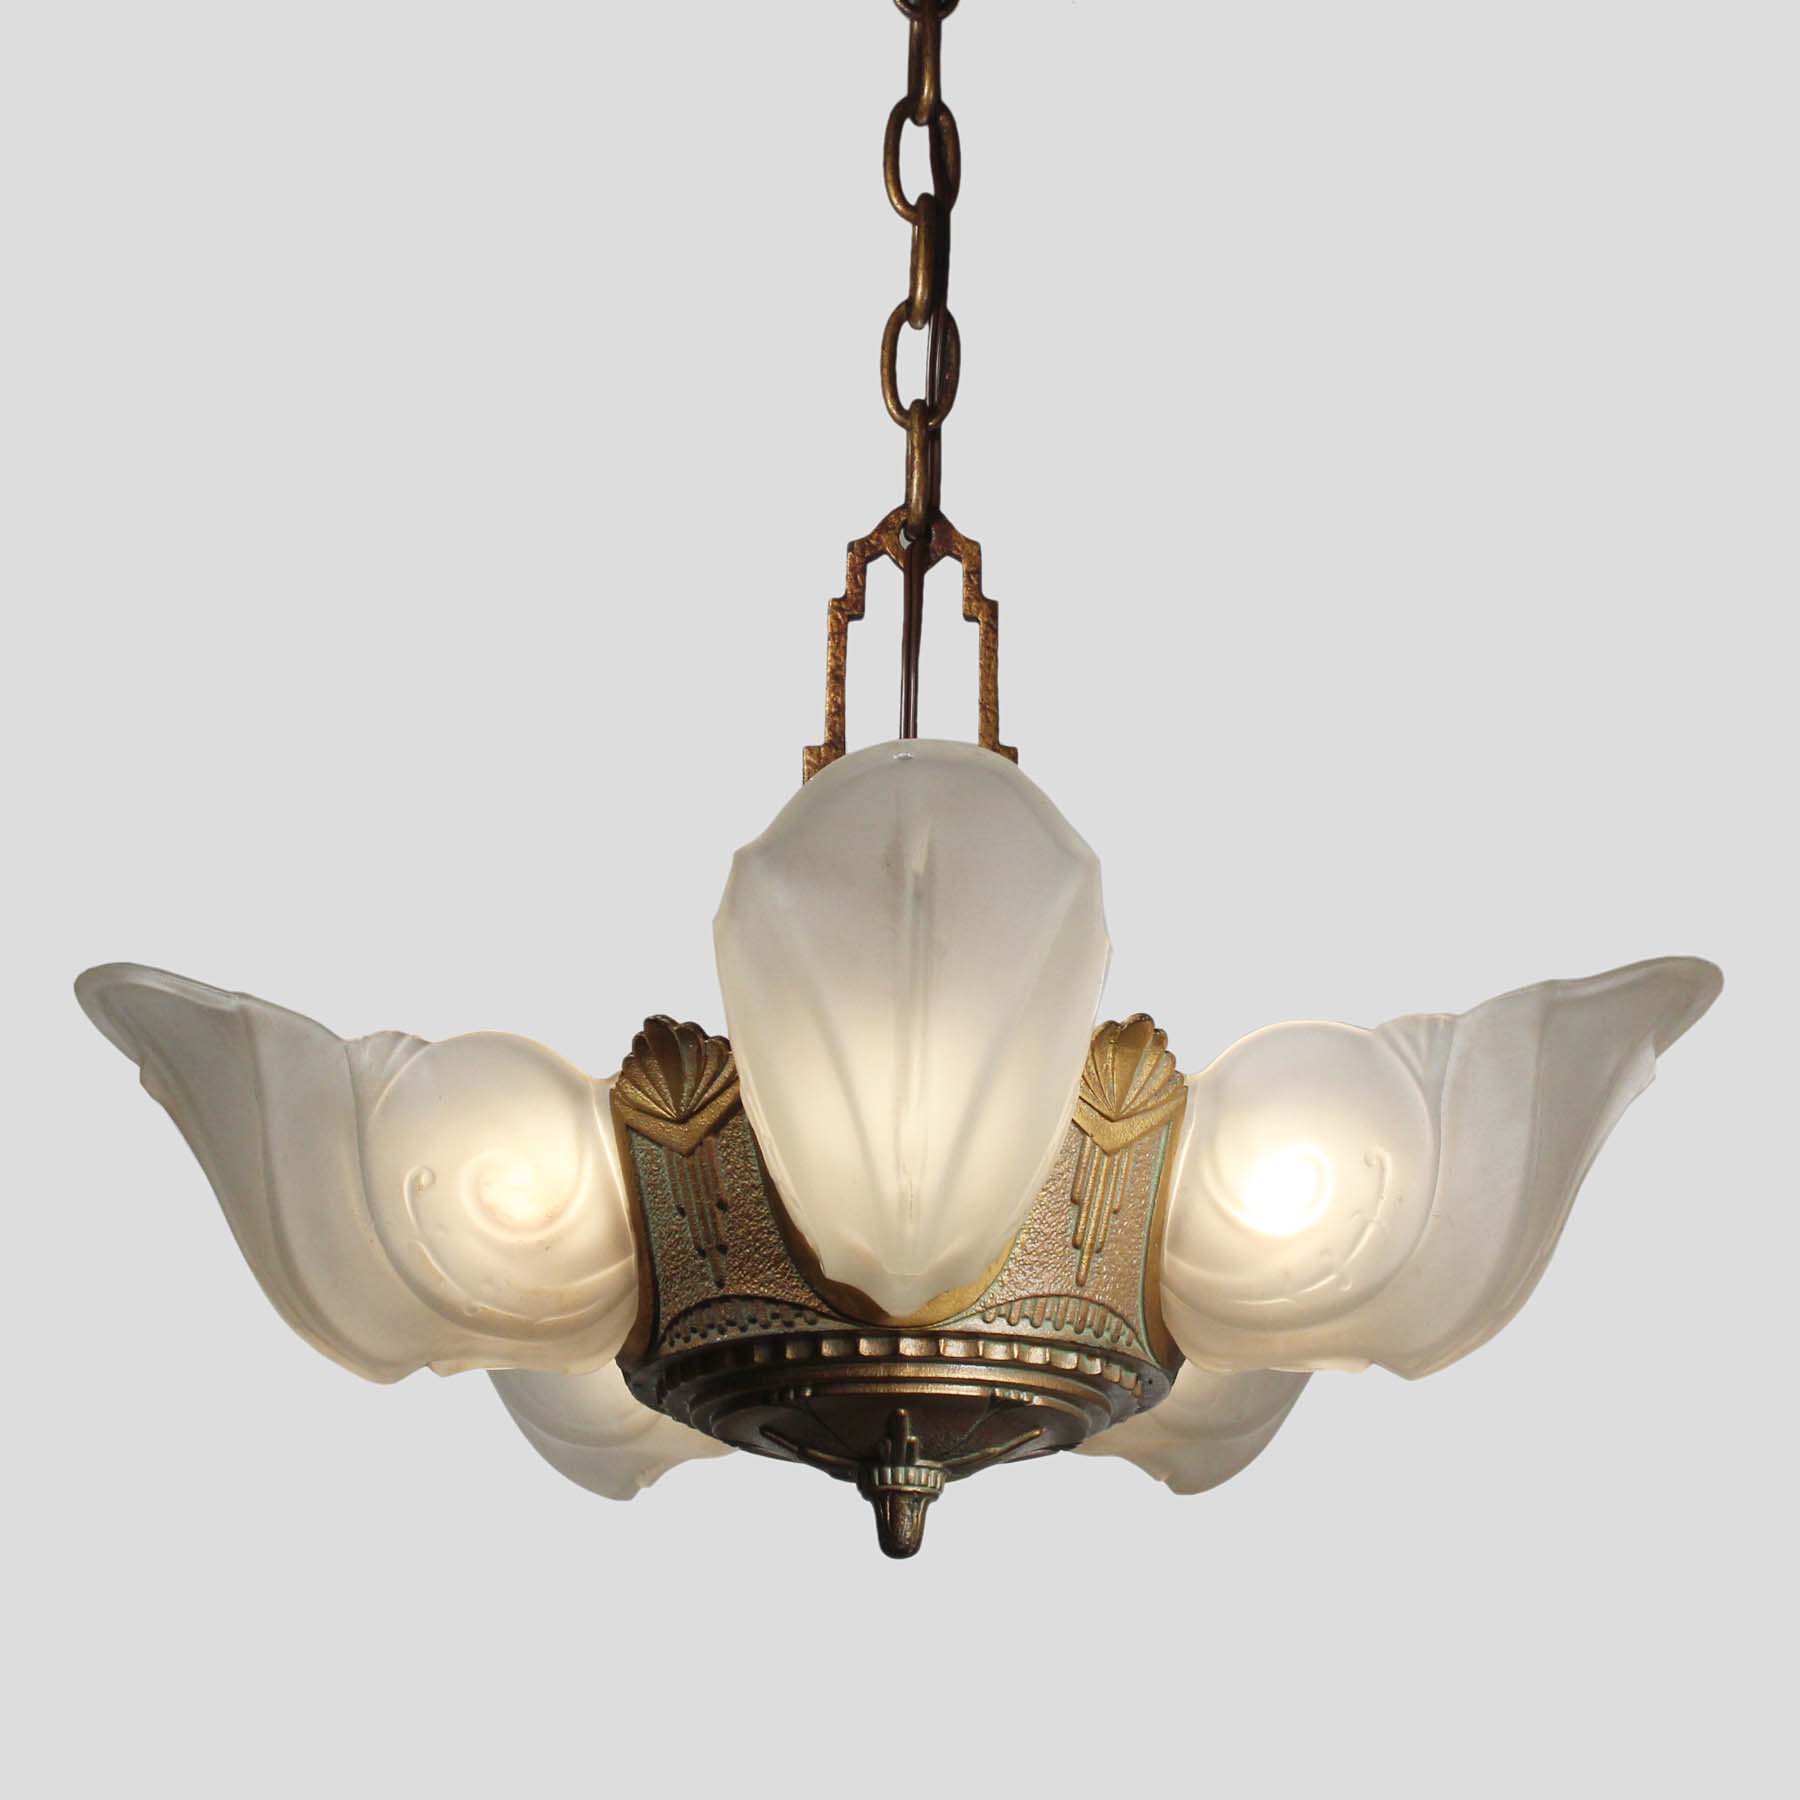 SOLD Antique Five-Light Art Deco Slip Shade Chandelier, "Warwick” Design by Glasco Electric-67731